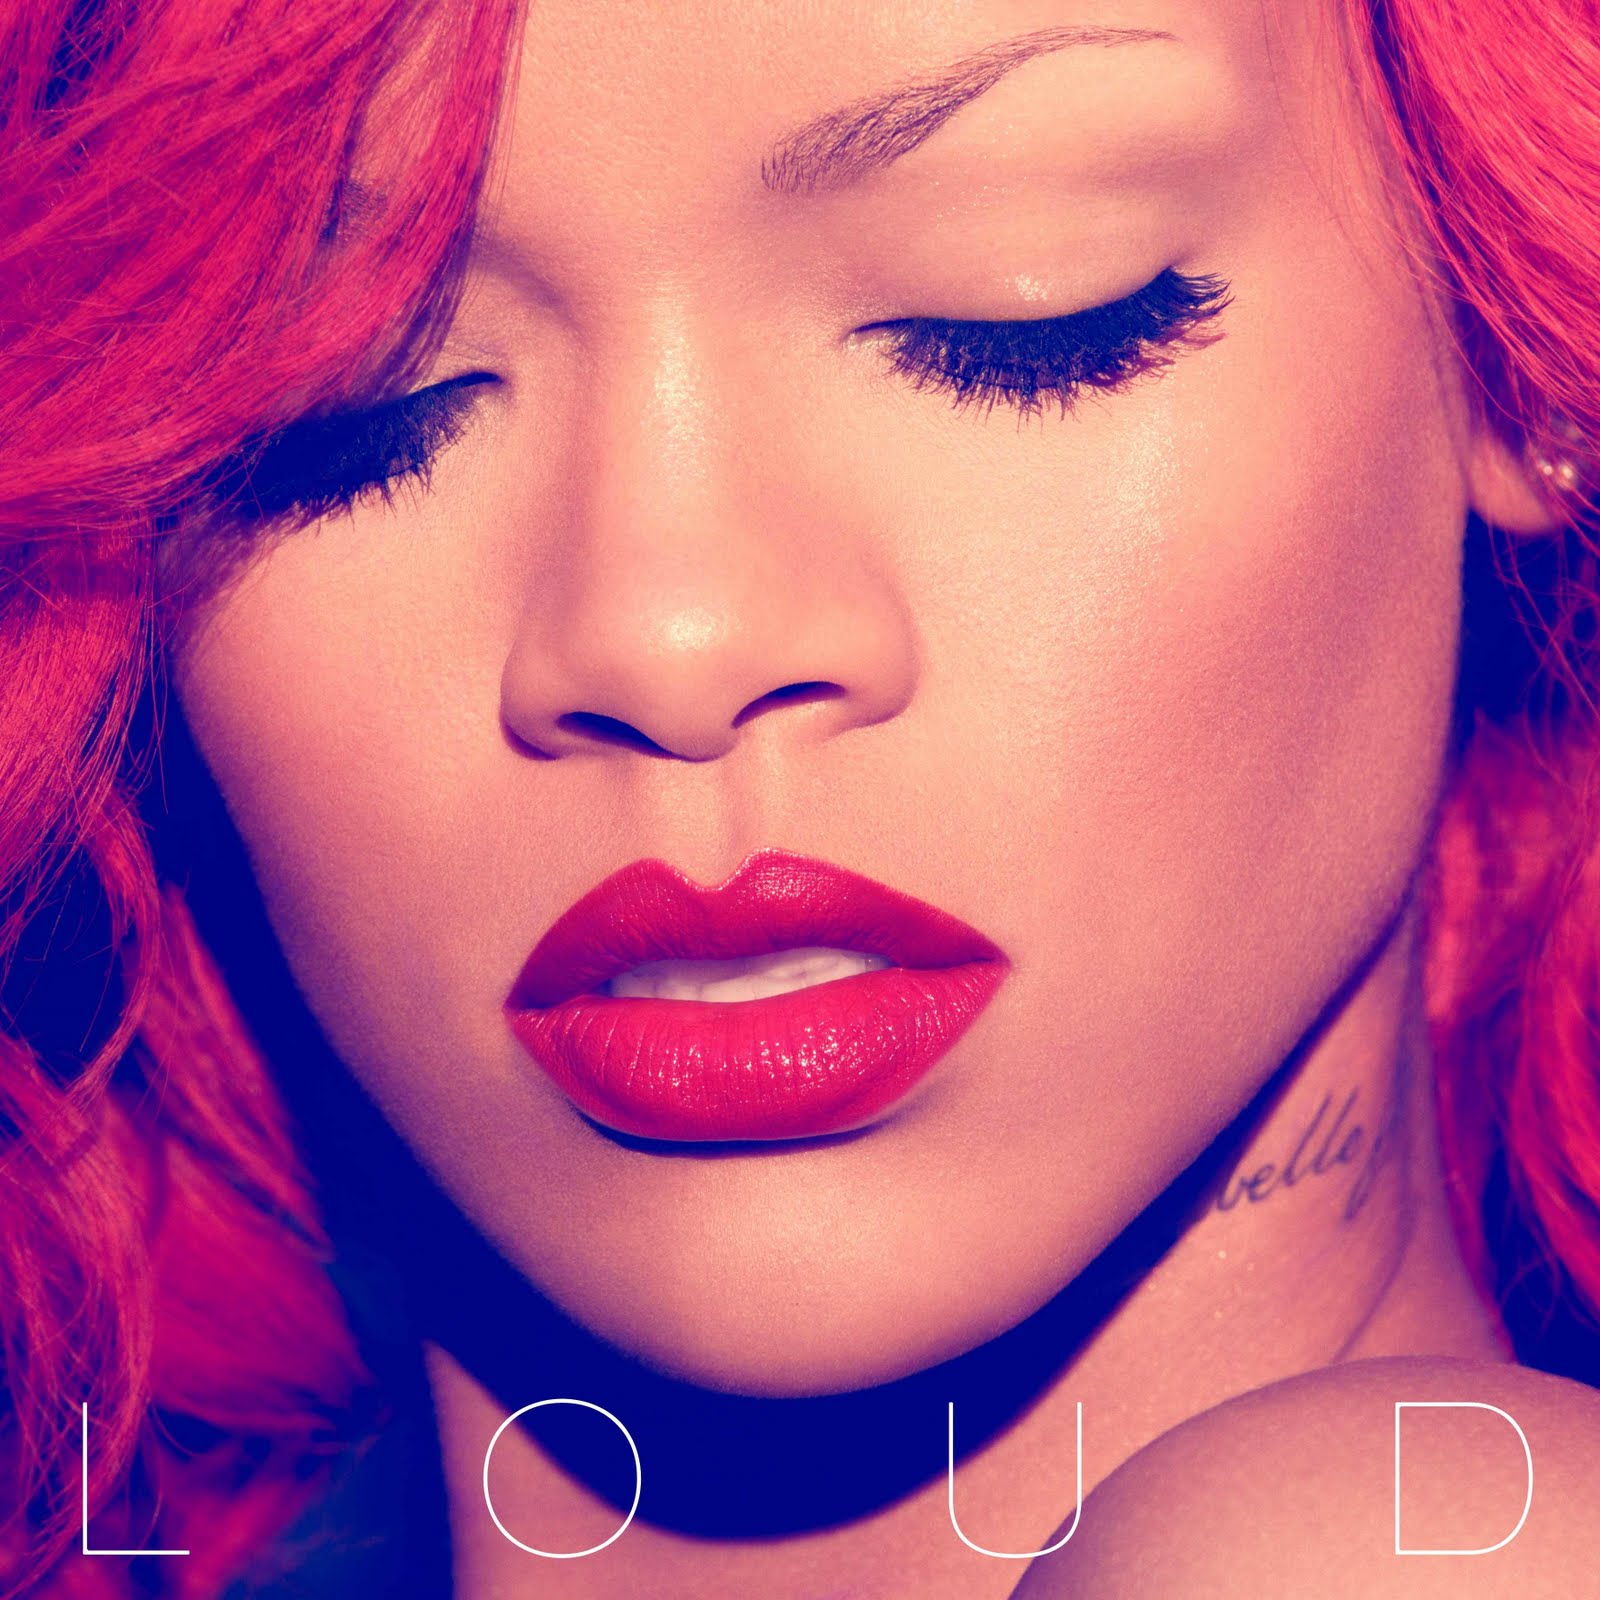 http://1.bp.blogspot.com/_6lV5hzNR1fU/TKuLySXWhhI/AAAAAAAAIyM/00EjE2oX5CY/s1600/Rihanna-Loud-Official-Album-Cover.jpg